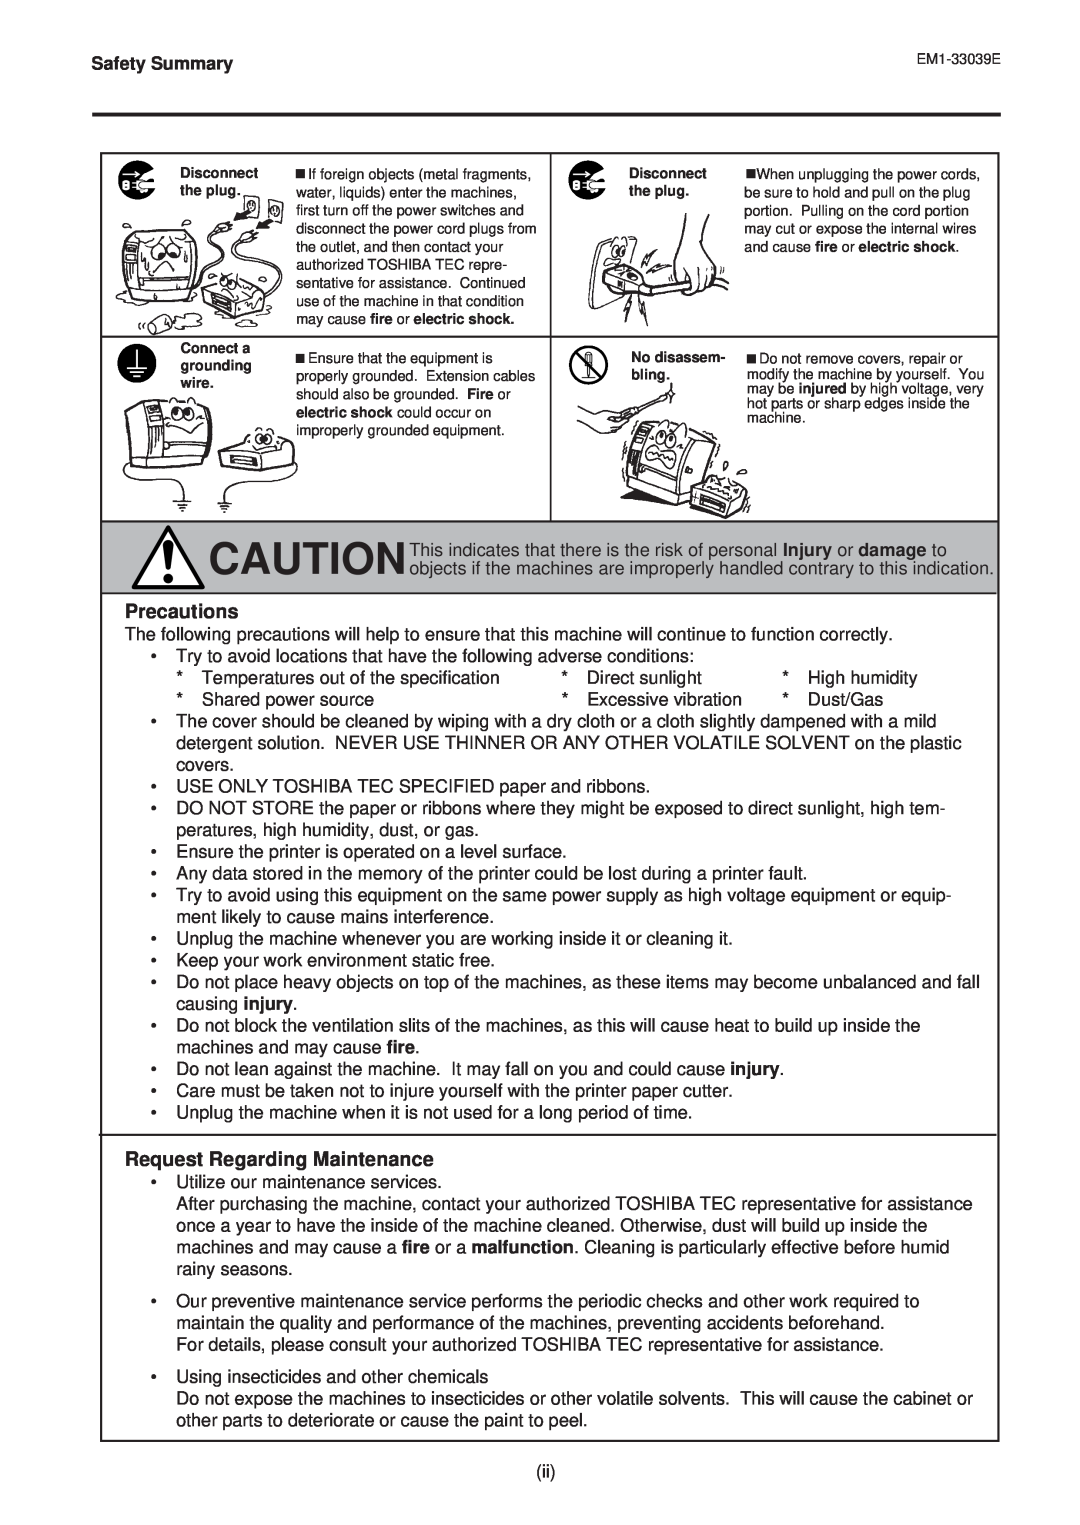 Toshiba EM1-33039EE, B-870 SERIES owner manual Precautions, Request Regarding Maintenance, Safety Summary 